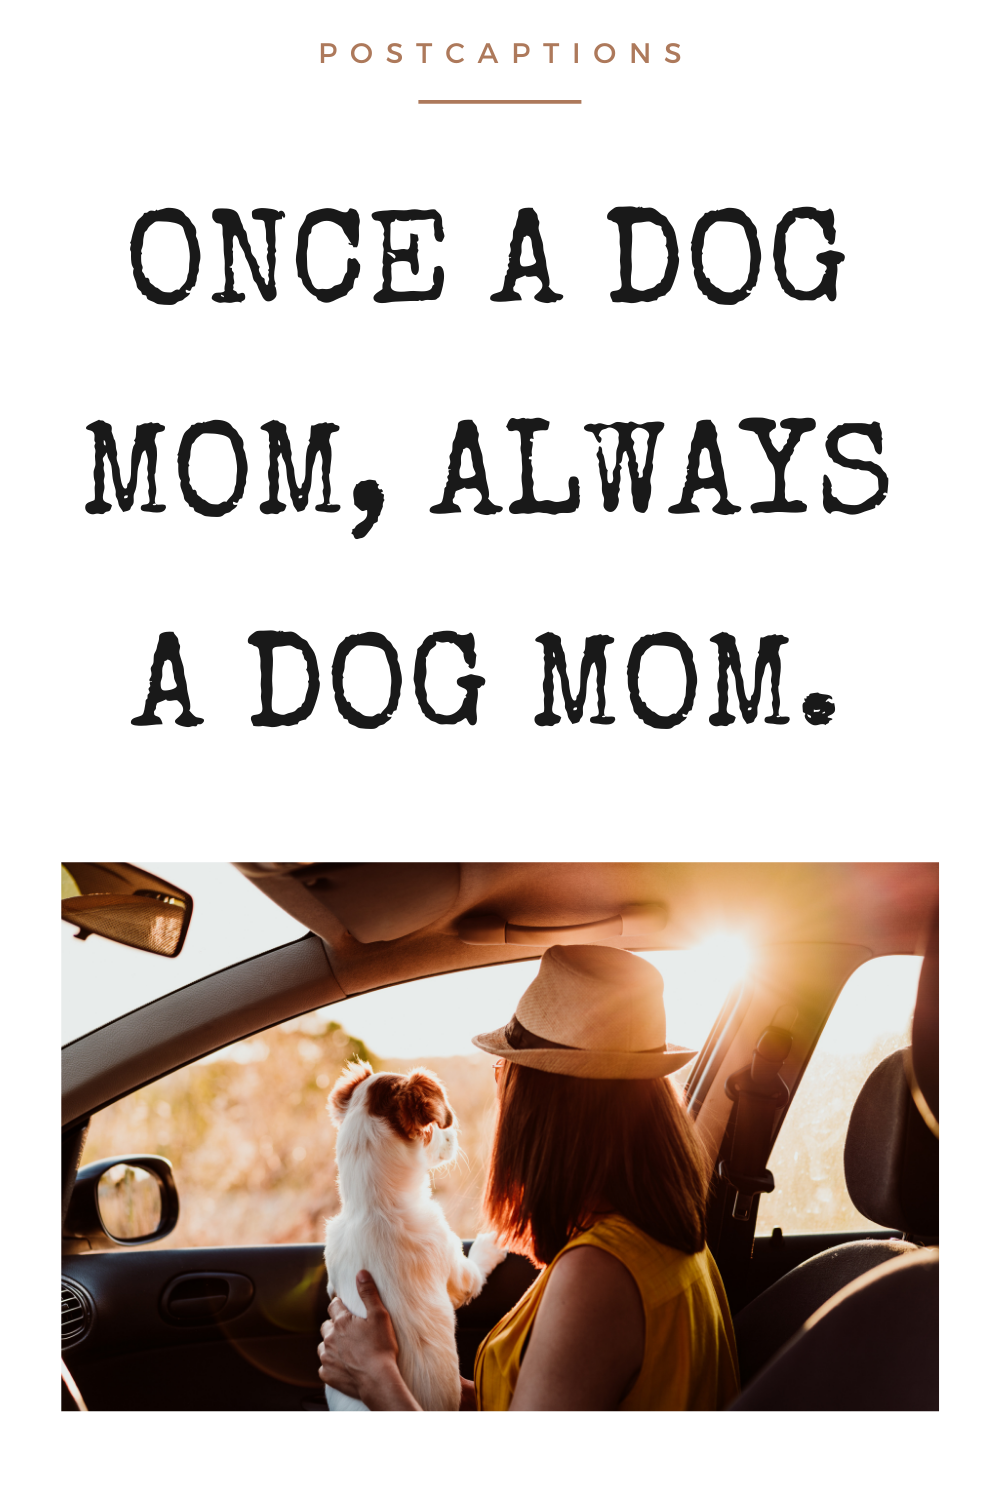 Dog mom captions